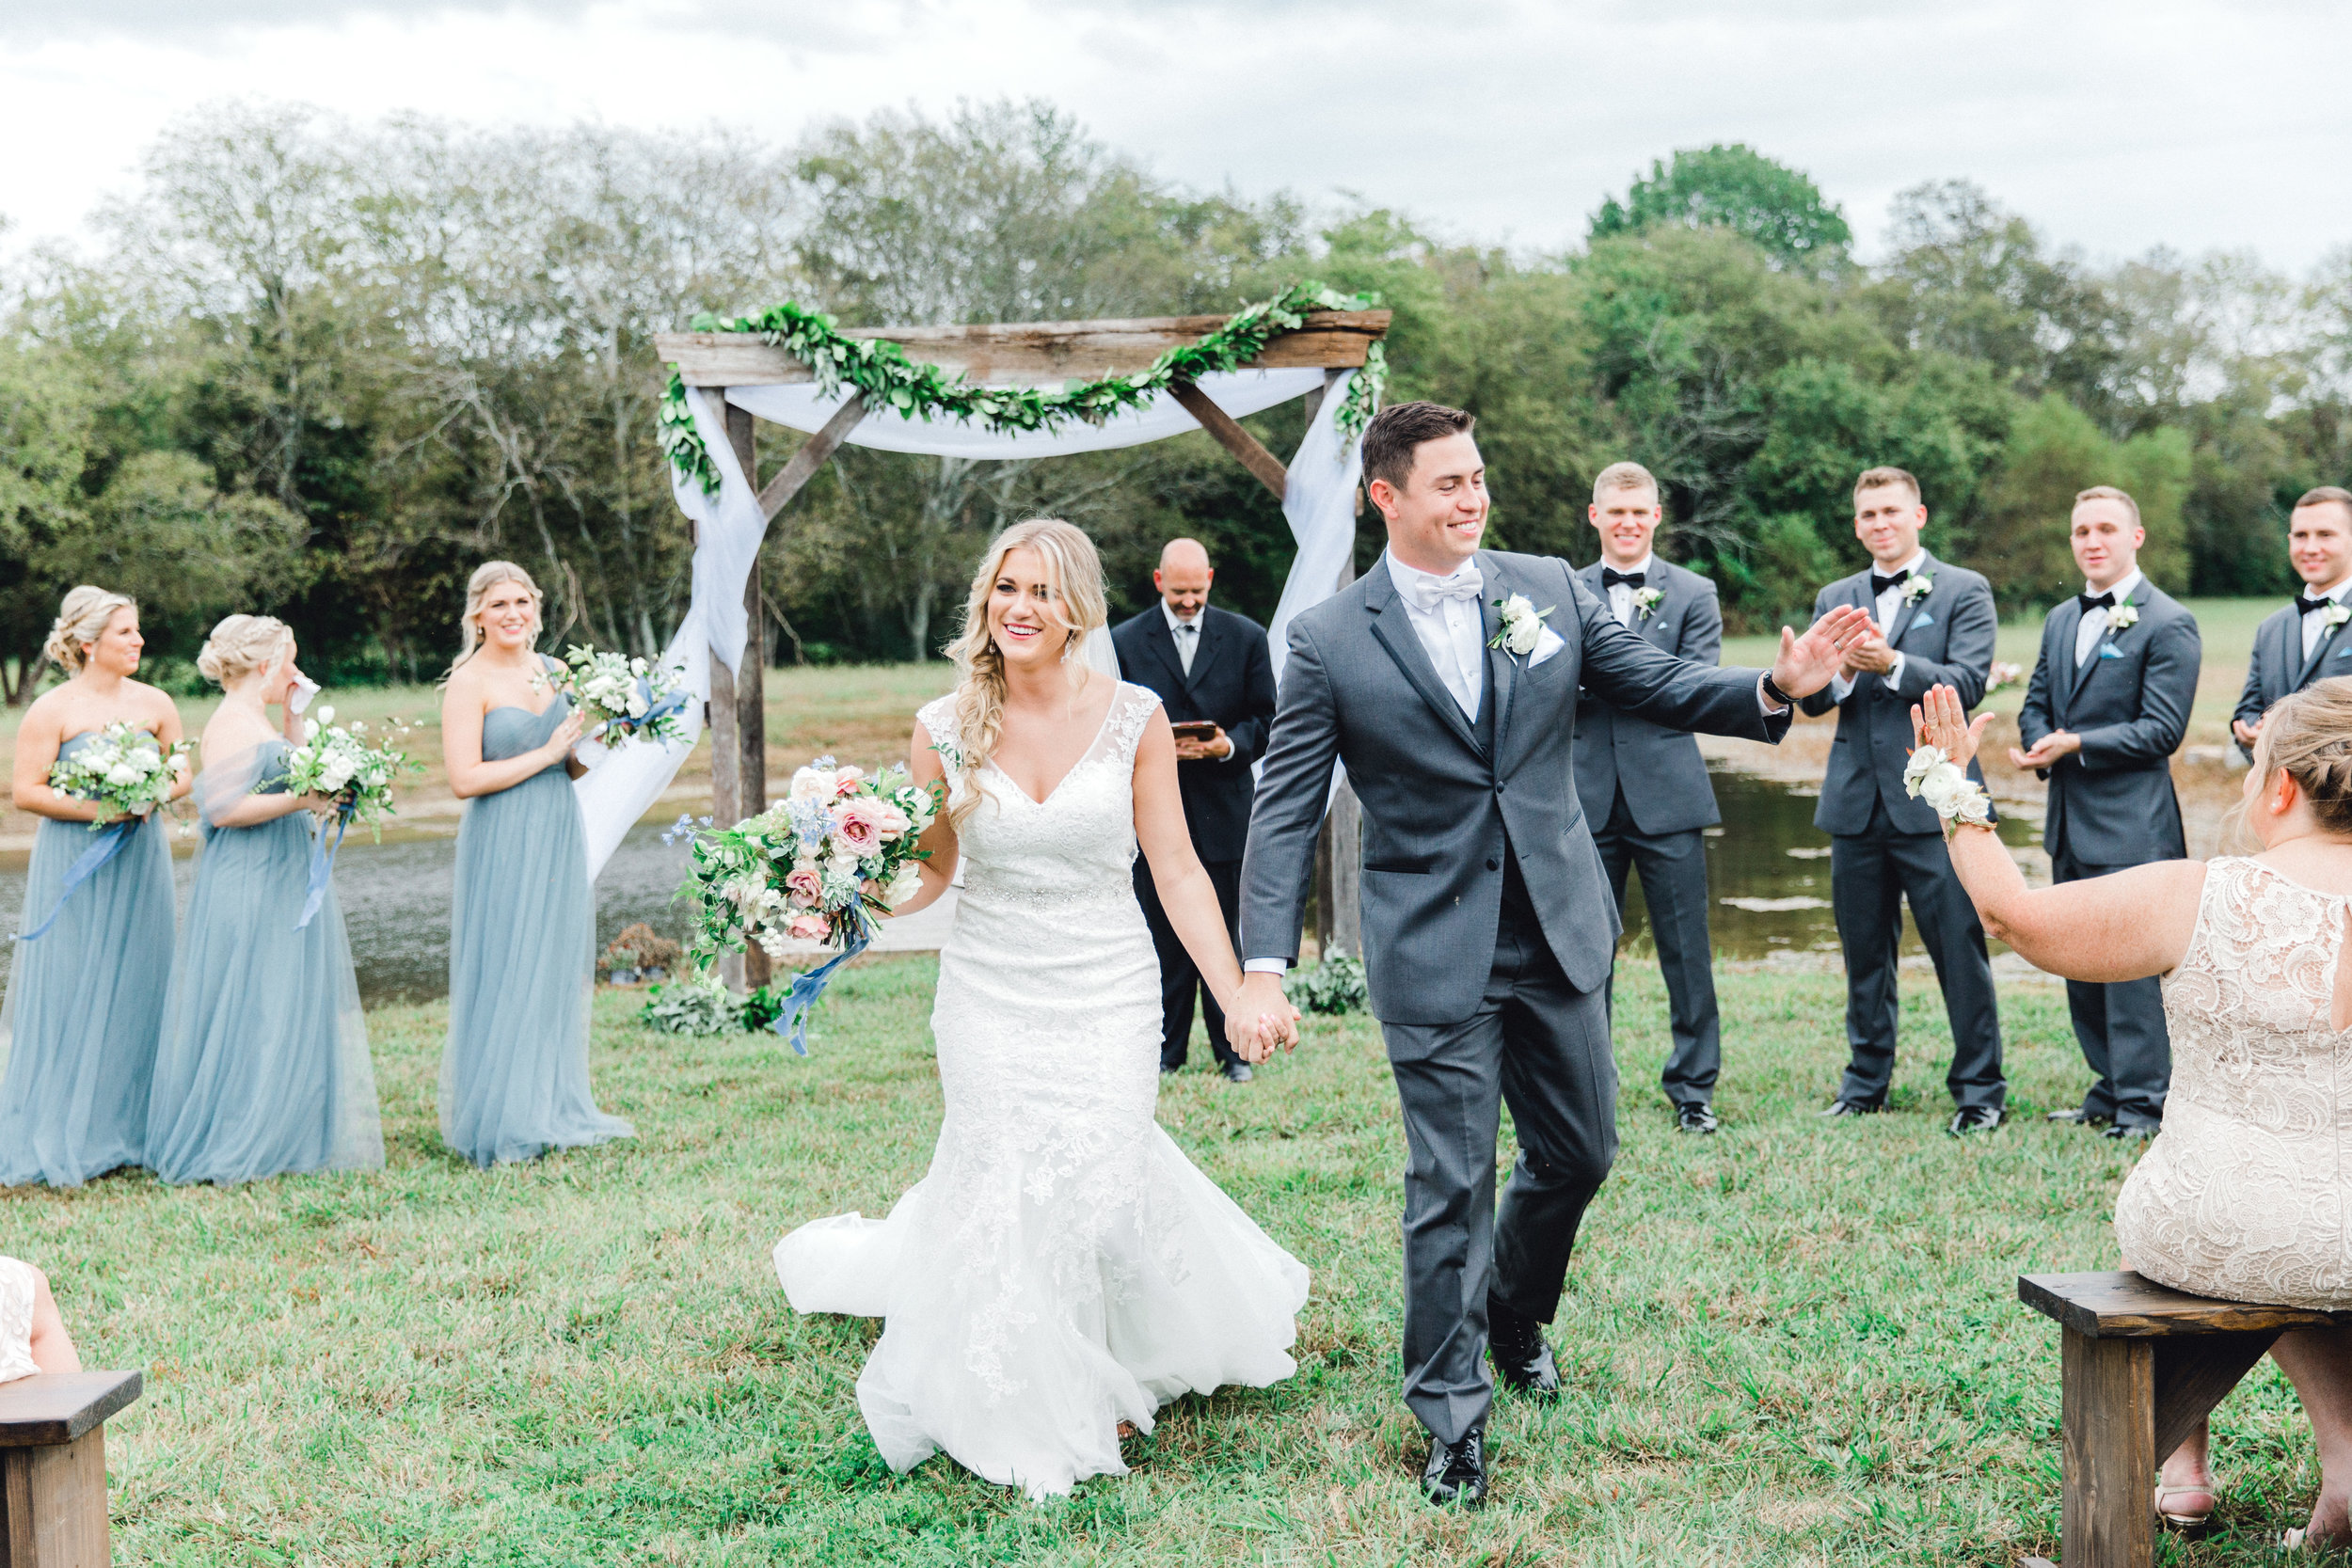 Paige-Mercer-Photography-Florida-Wedding-Photographer-Alyssa&Drew-54.jpg